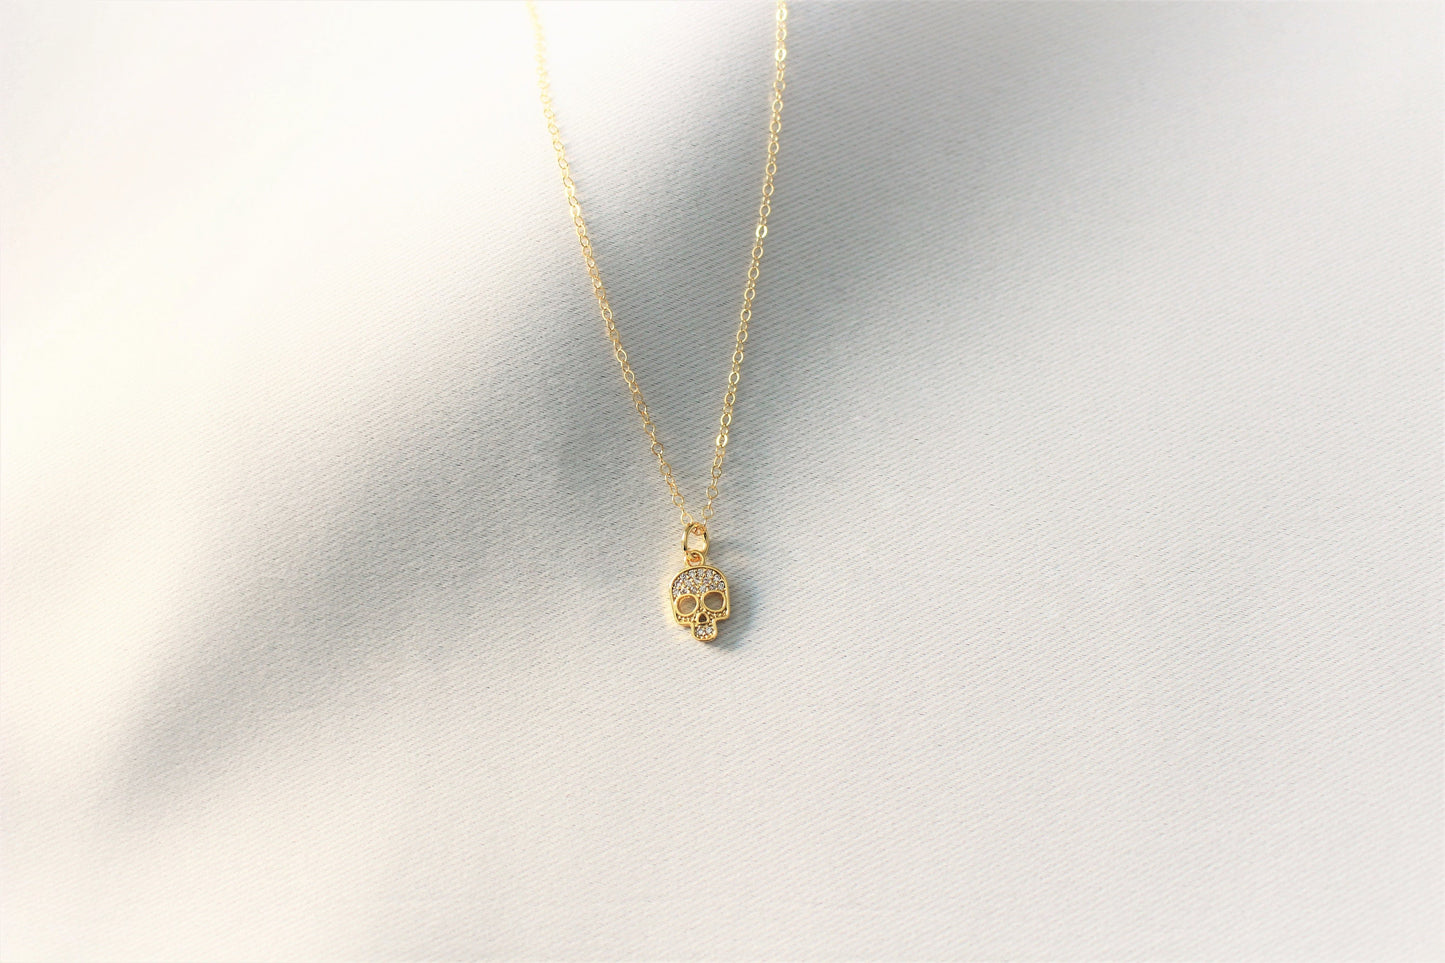 Dainty Skull Necklace ∙ 14k Gold filled chain ∙ Shiny charm pendant skull